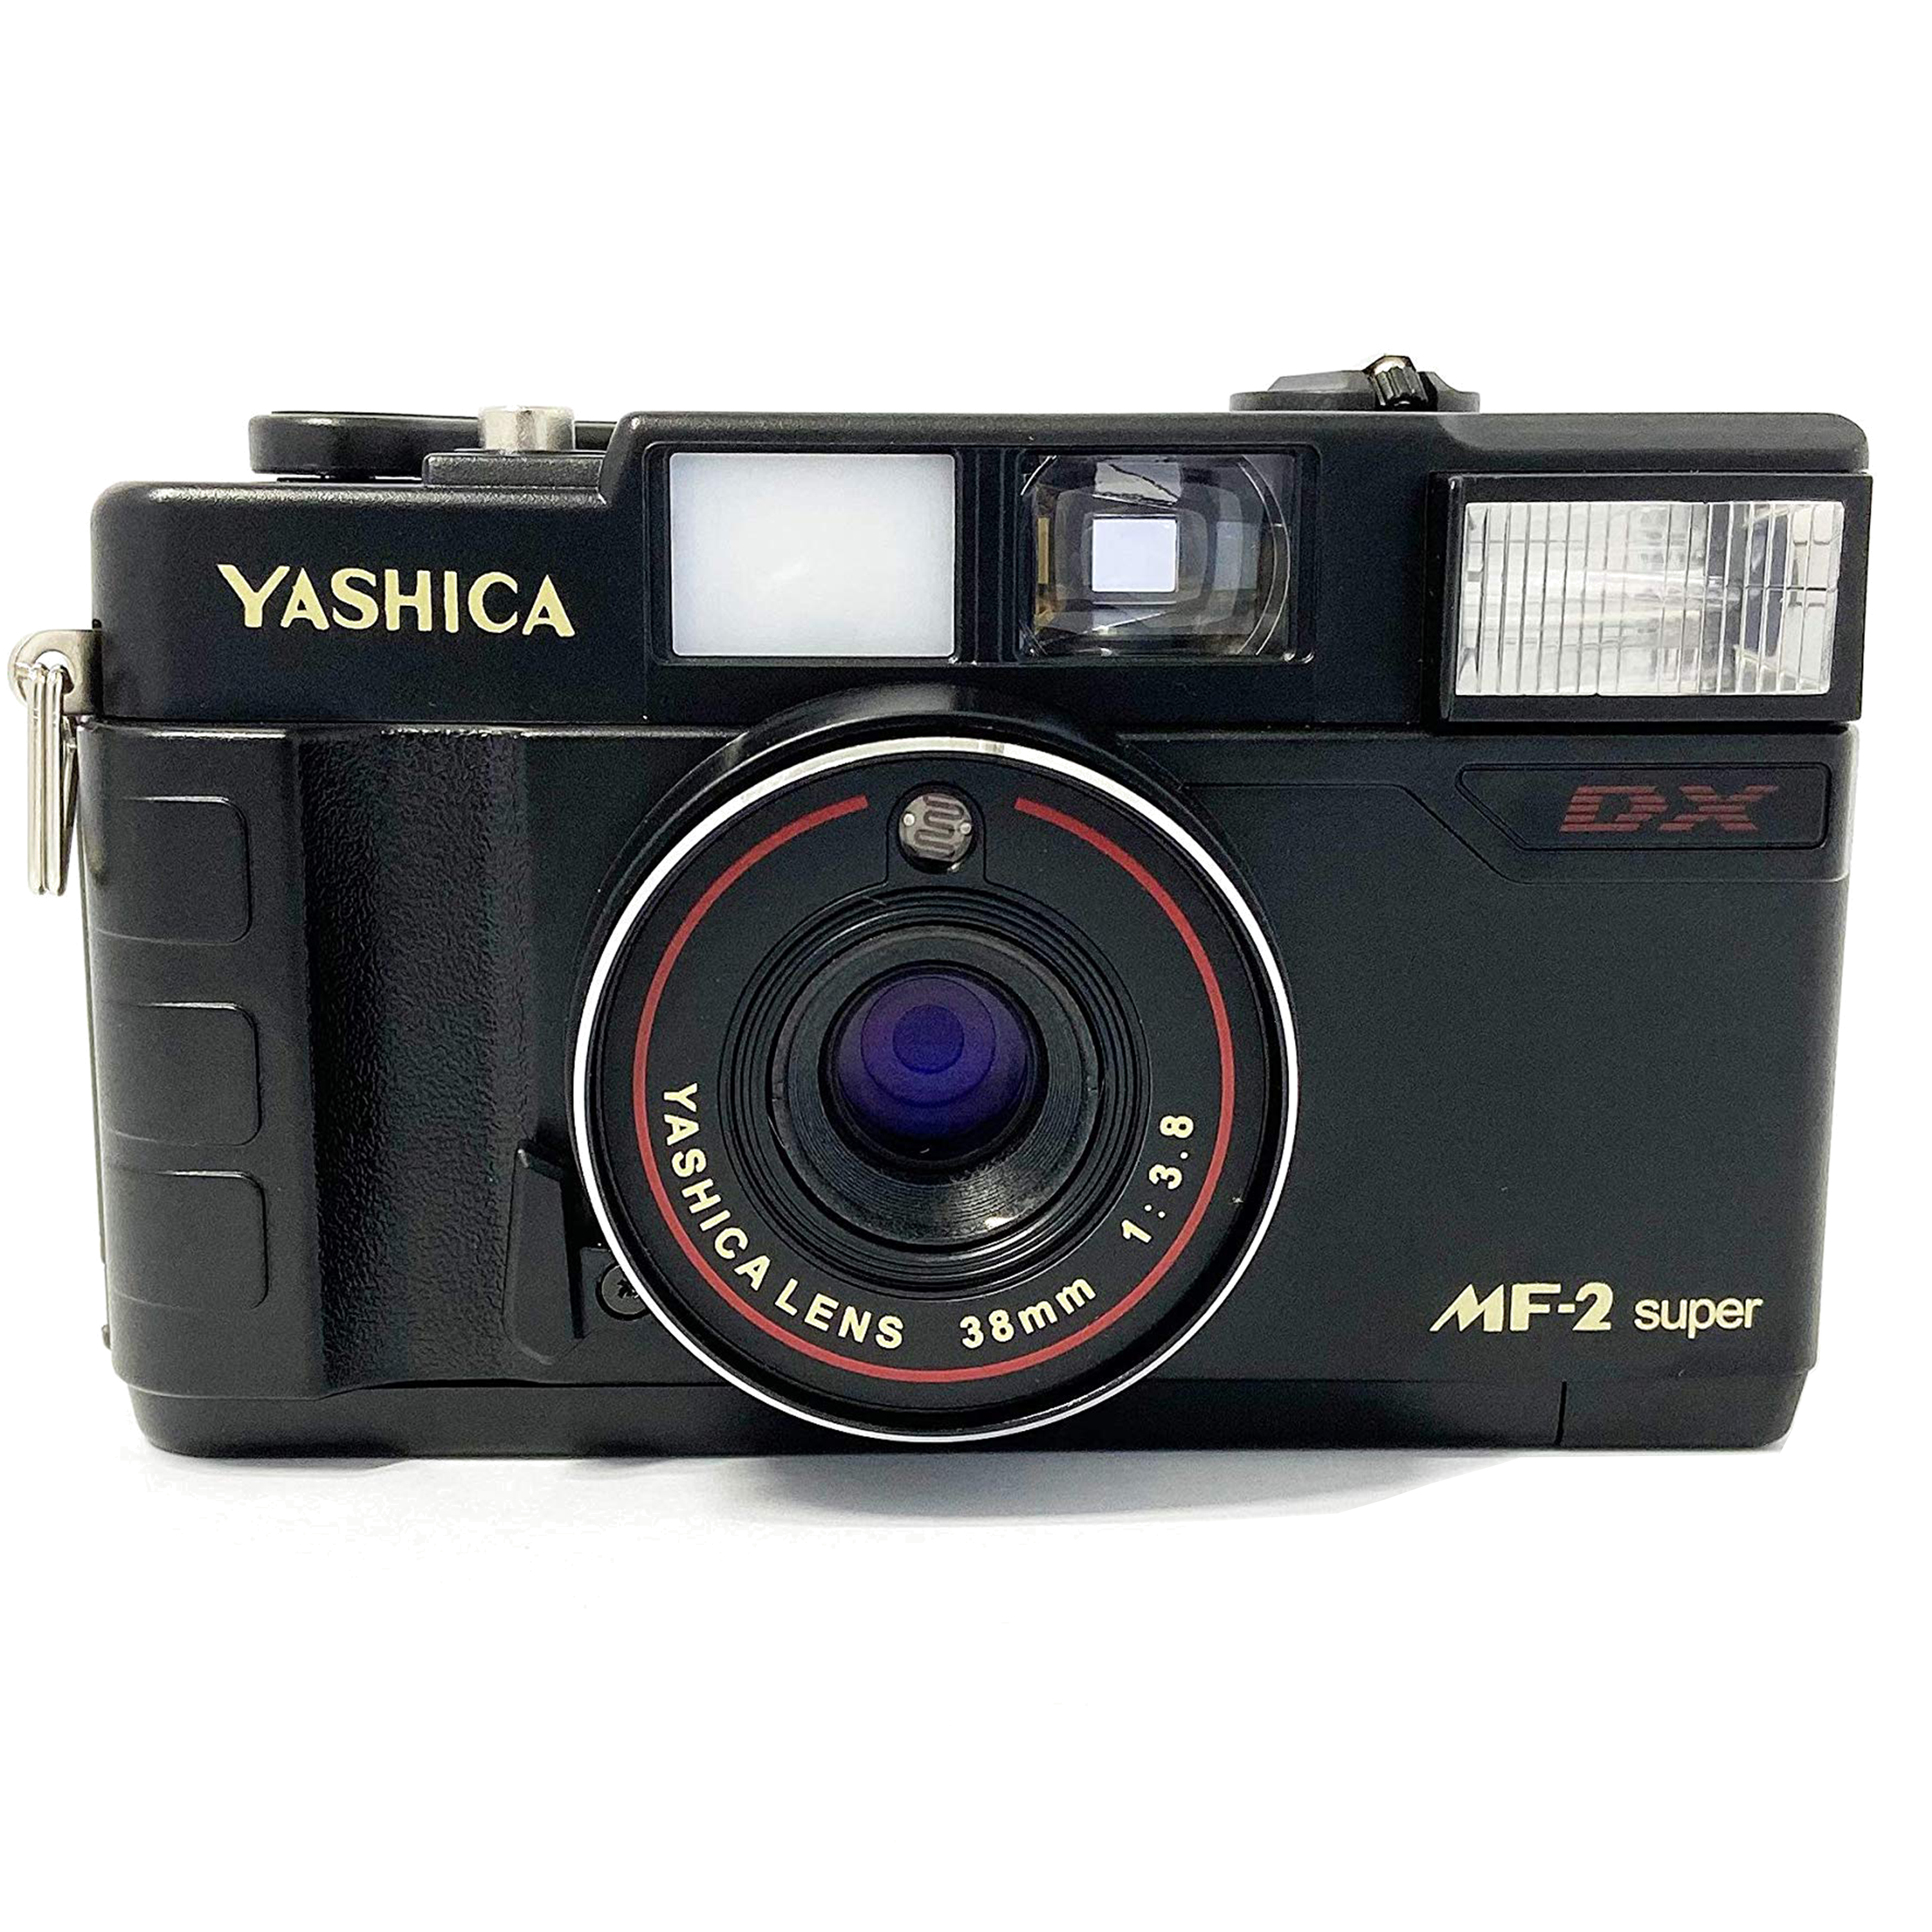 YASHICA MF-2 Super DX 35mm Film Camera.